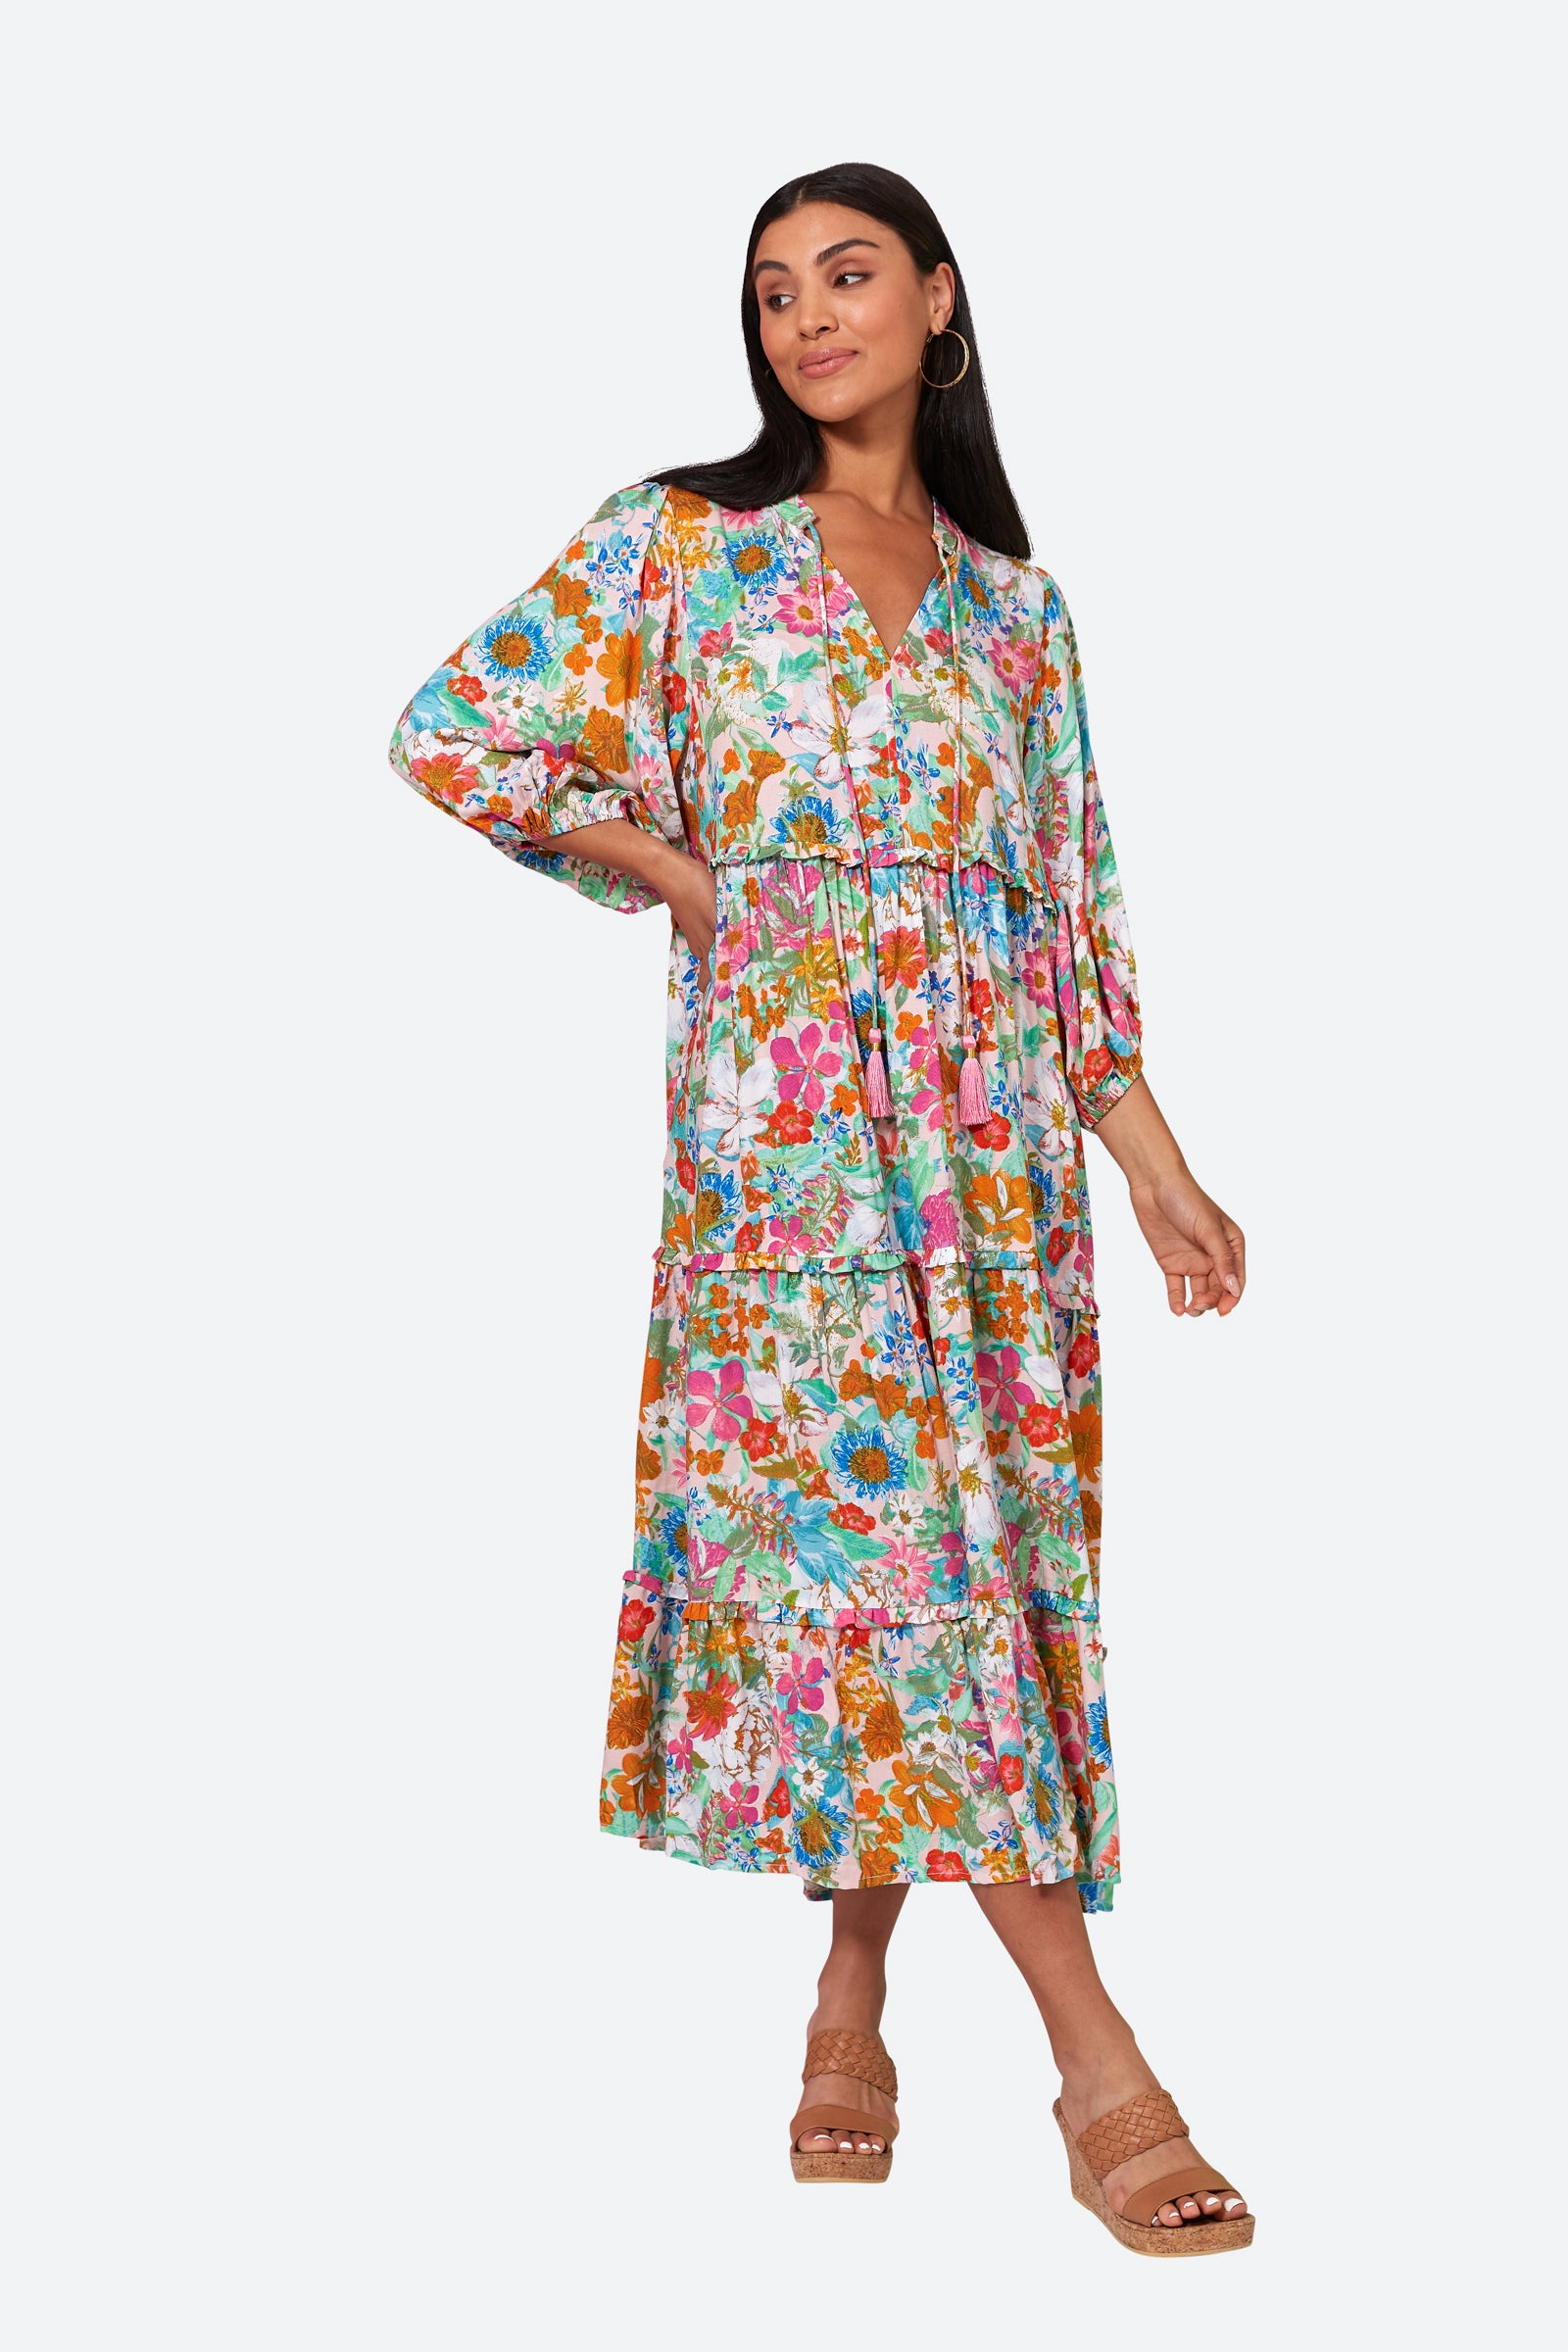 Esprit Tiered Dress - Pink Flourish - eb&ive Clothing - Dress 3/4 Length Linen